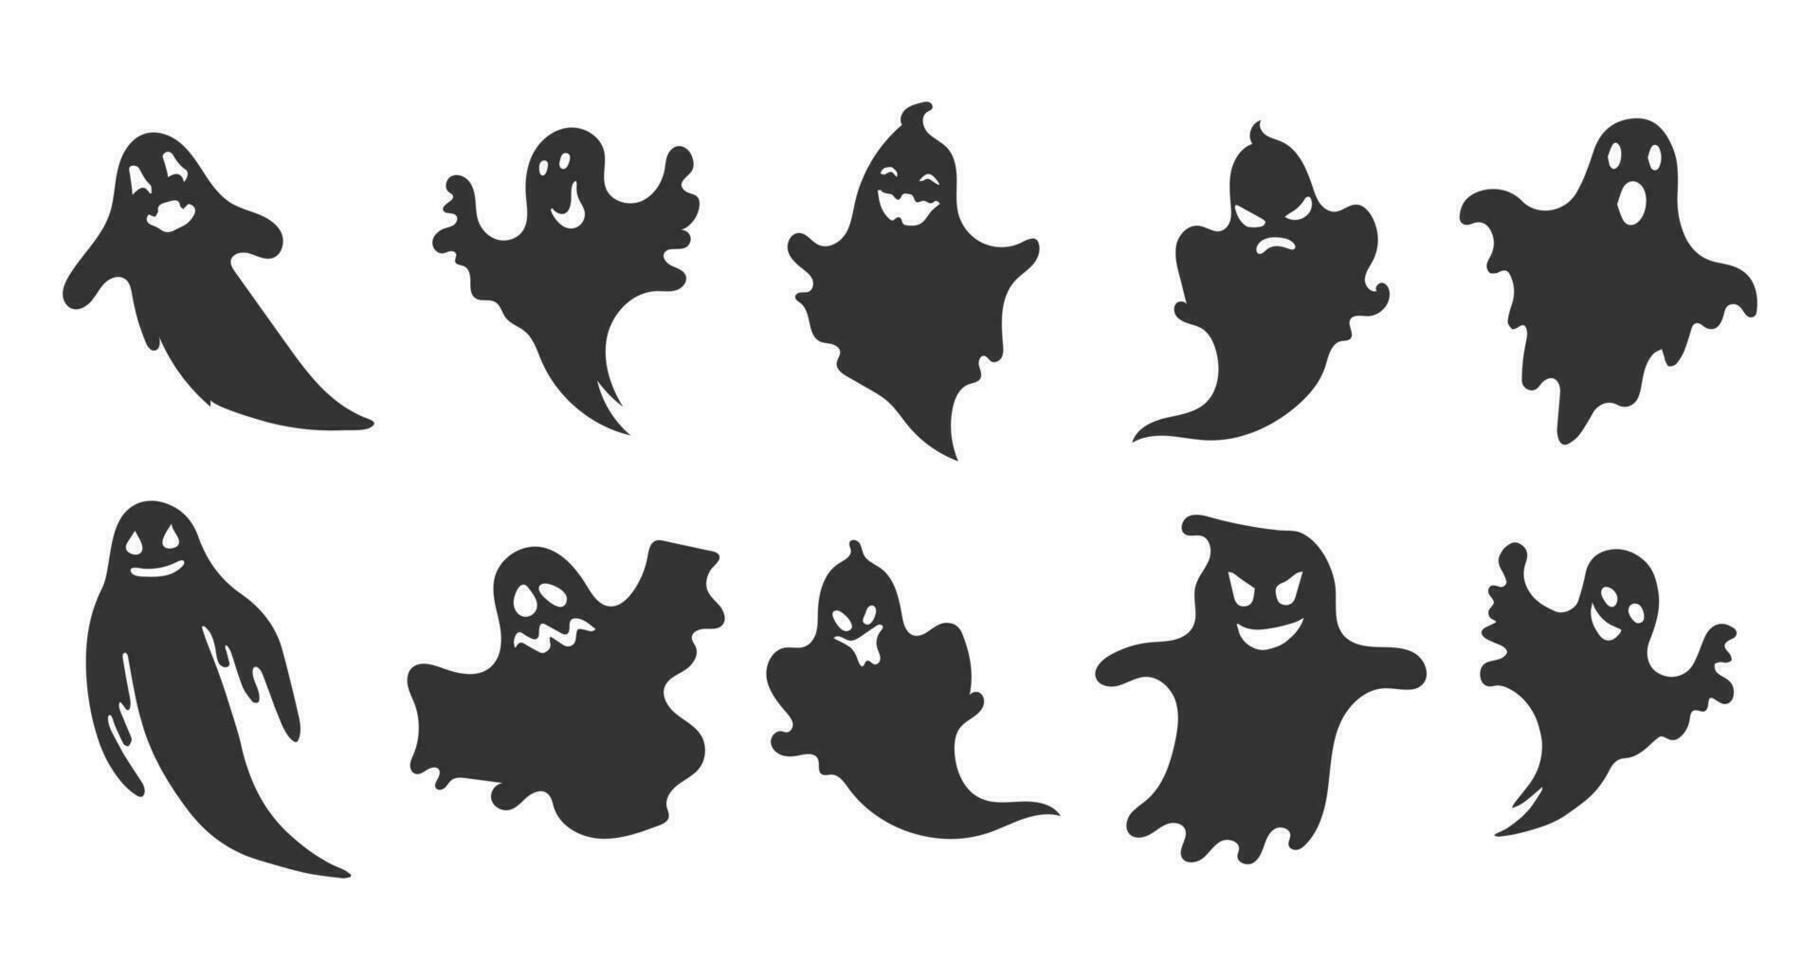 impostato di fantasma icone, Halloween fantasmi. festivo arredamento elementi, vettore